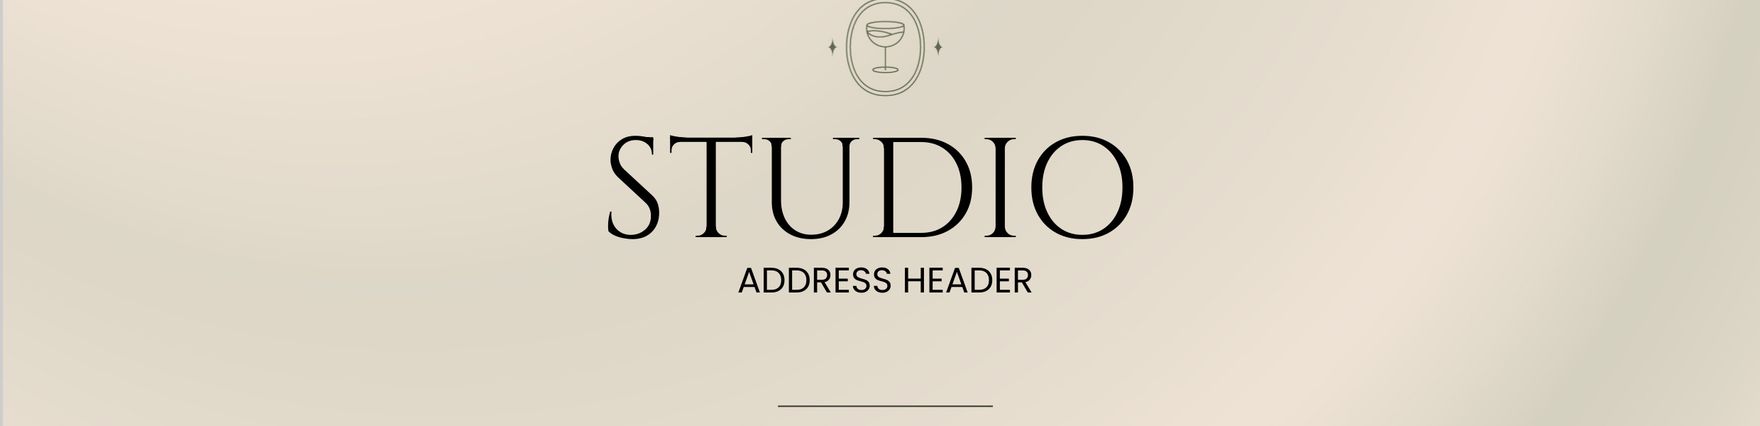 Free Studio Address Header Template